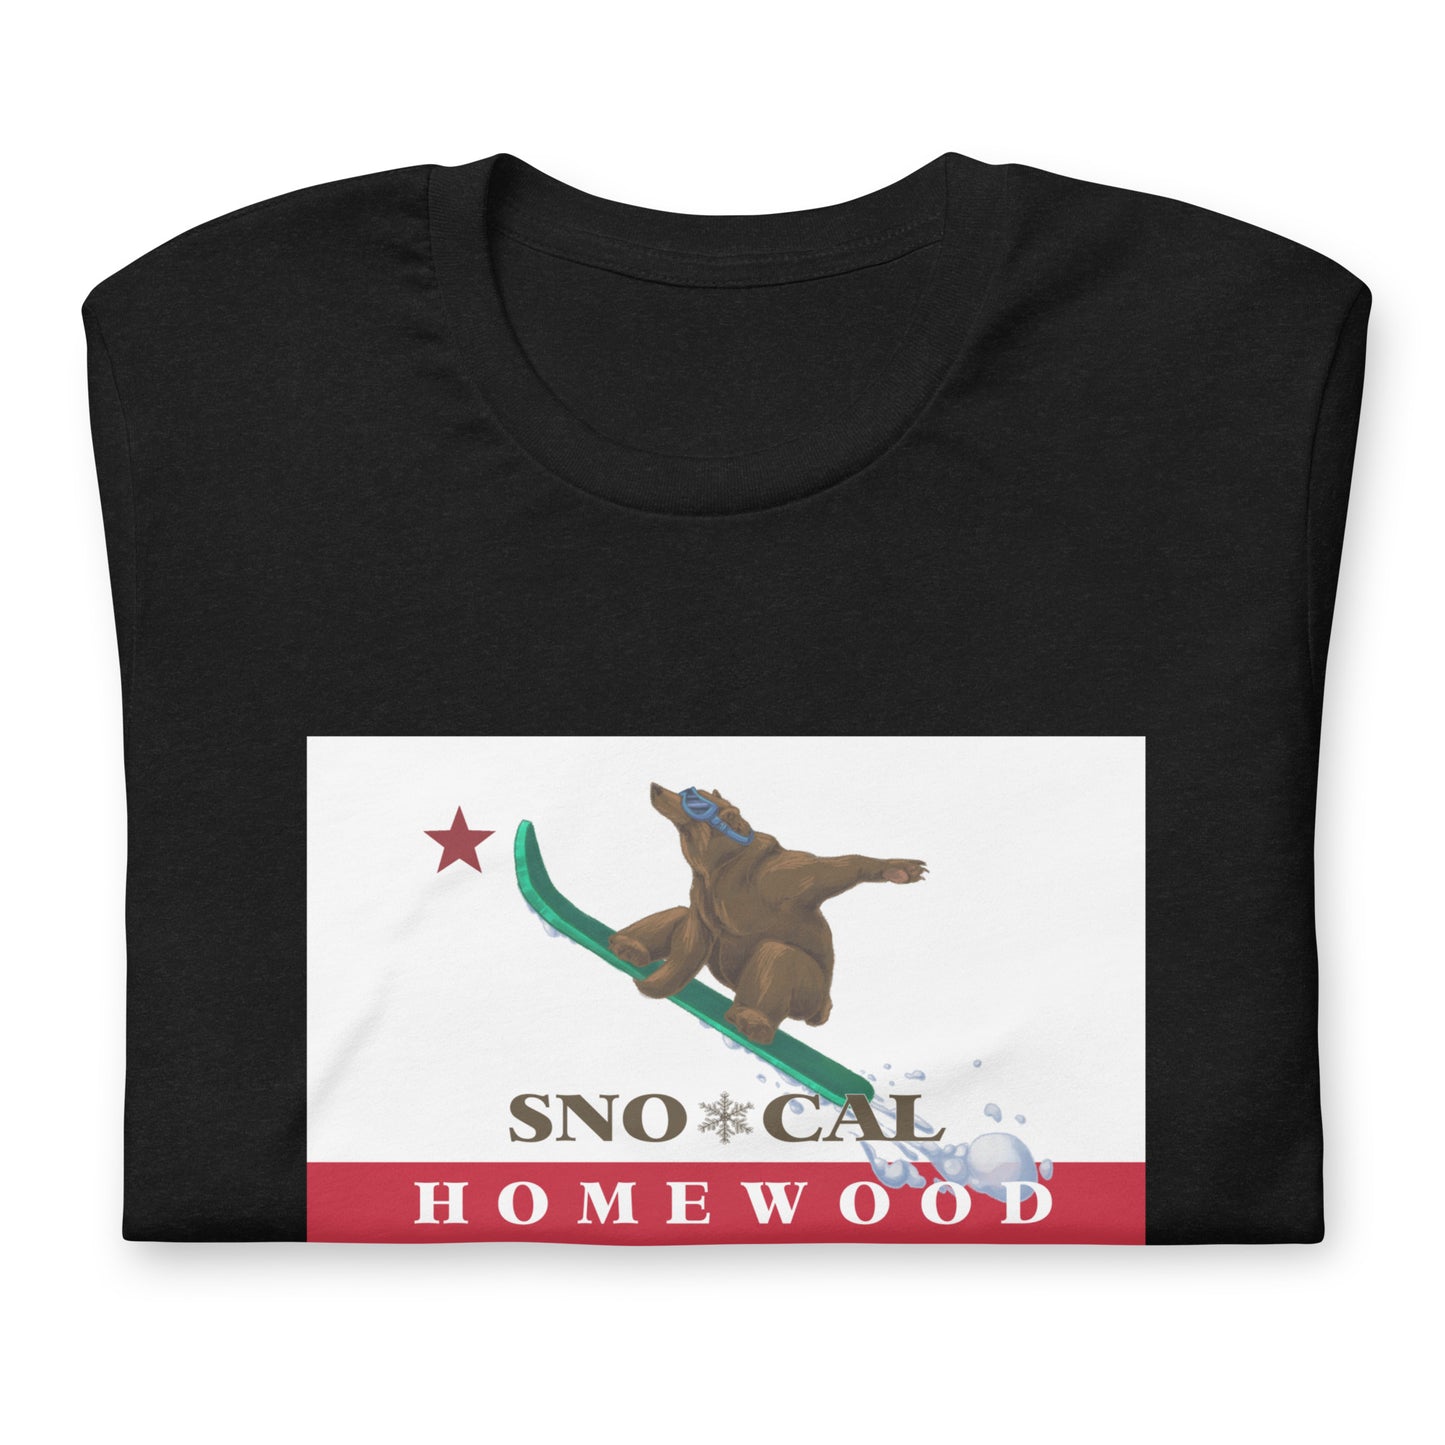 Homewood Sno*Cal Snowboard Shirt